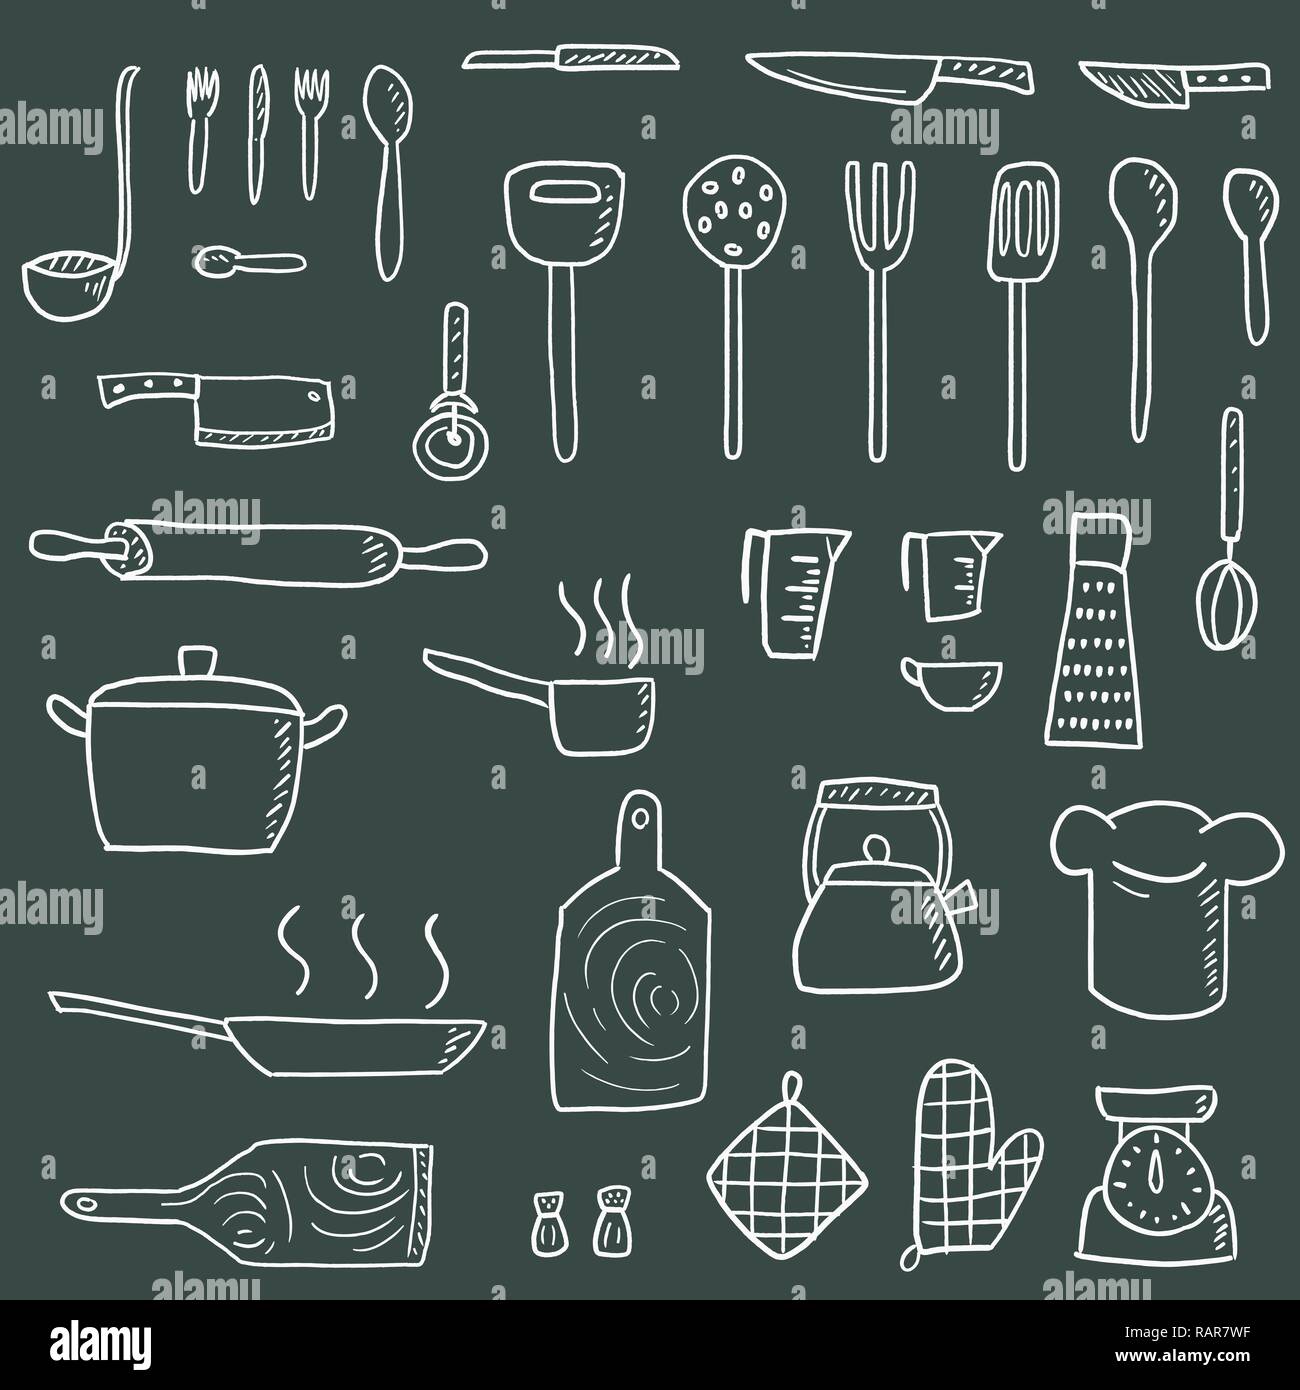 https://c8.alamy.com/comp/RAR7WF/kitchenware-icons-vector-set-cute-kitchen-utensils-doodle-hand-drawn-style-RAR7WF.jpg